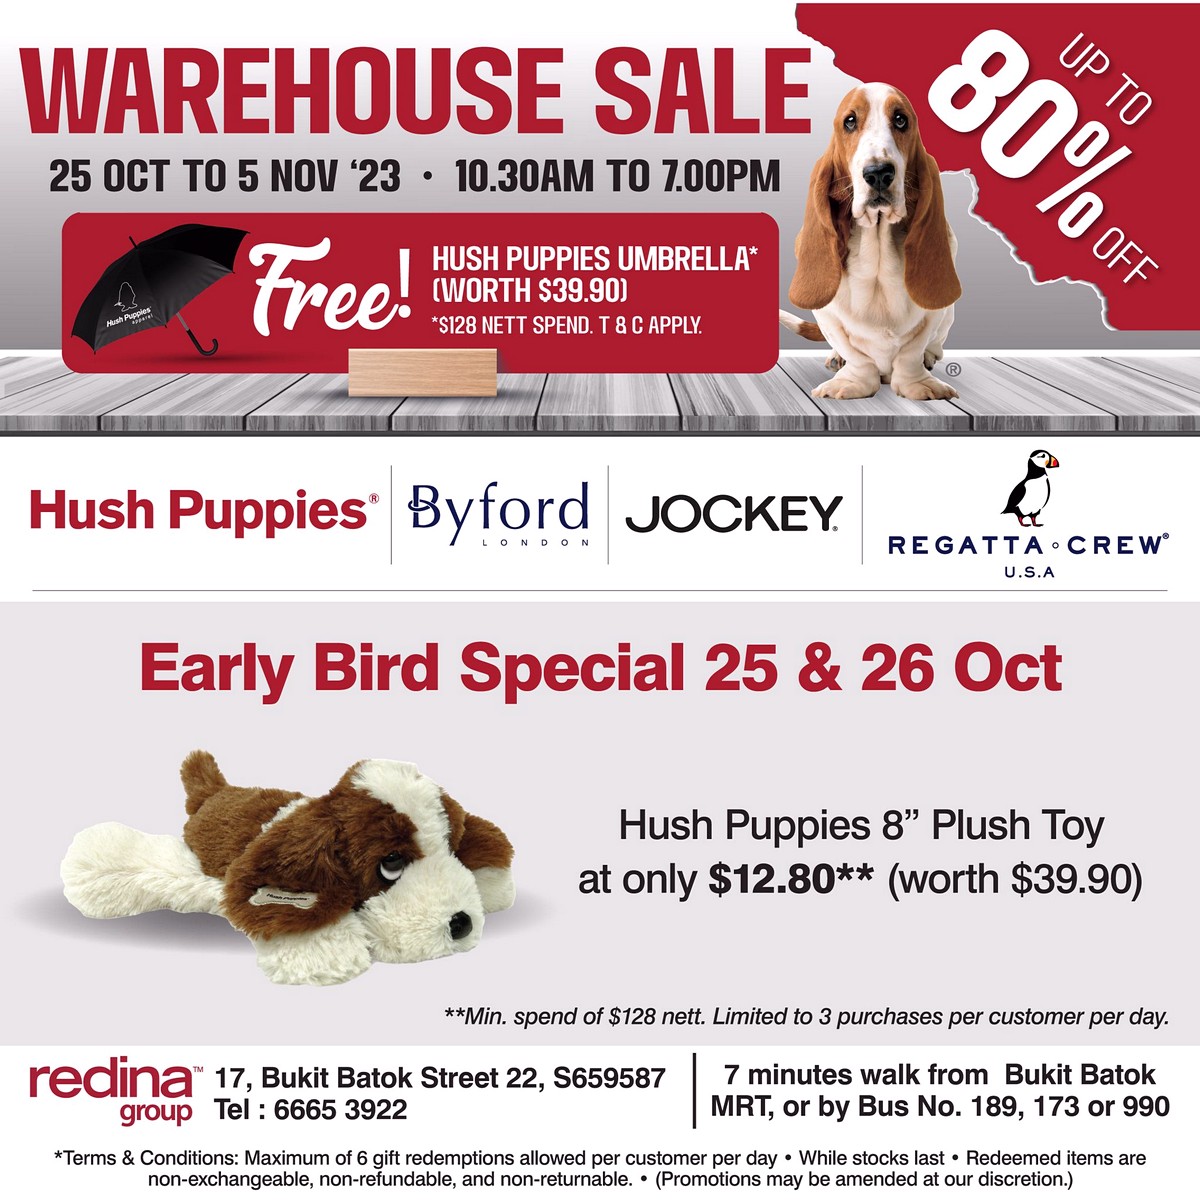 Hush-Puppies-Warehouse-Sale-2023-Singapore-Clearance-Redina-Group-Fashion-Apparels-02 25 Oct-5 Nov 2023: Hush Puppies Apparel Warehouse Sale! Clearance Up to 80% OFF at Bukit Batok